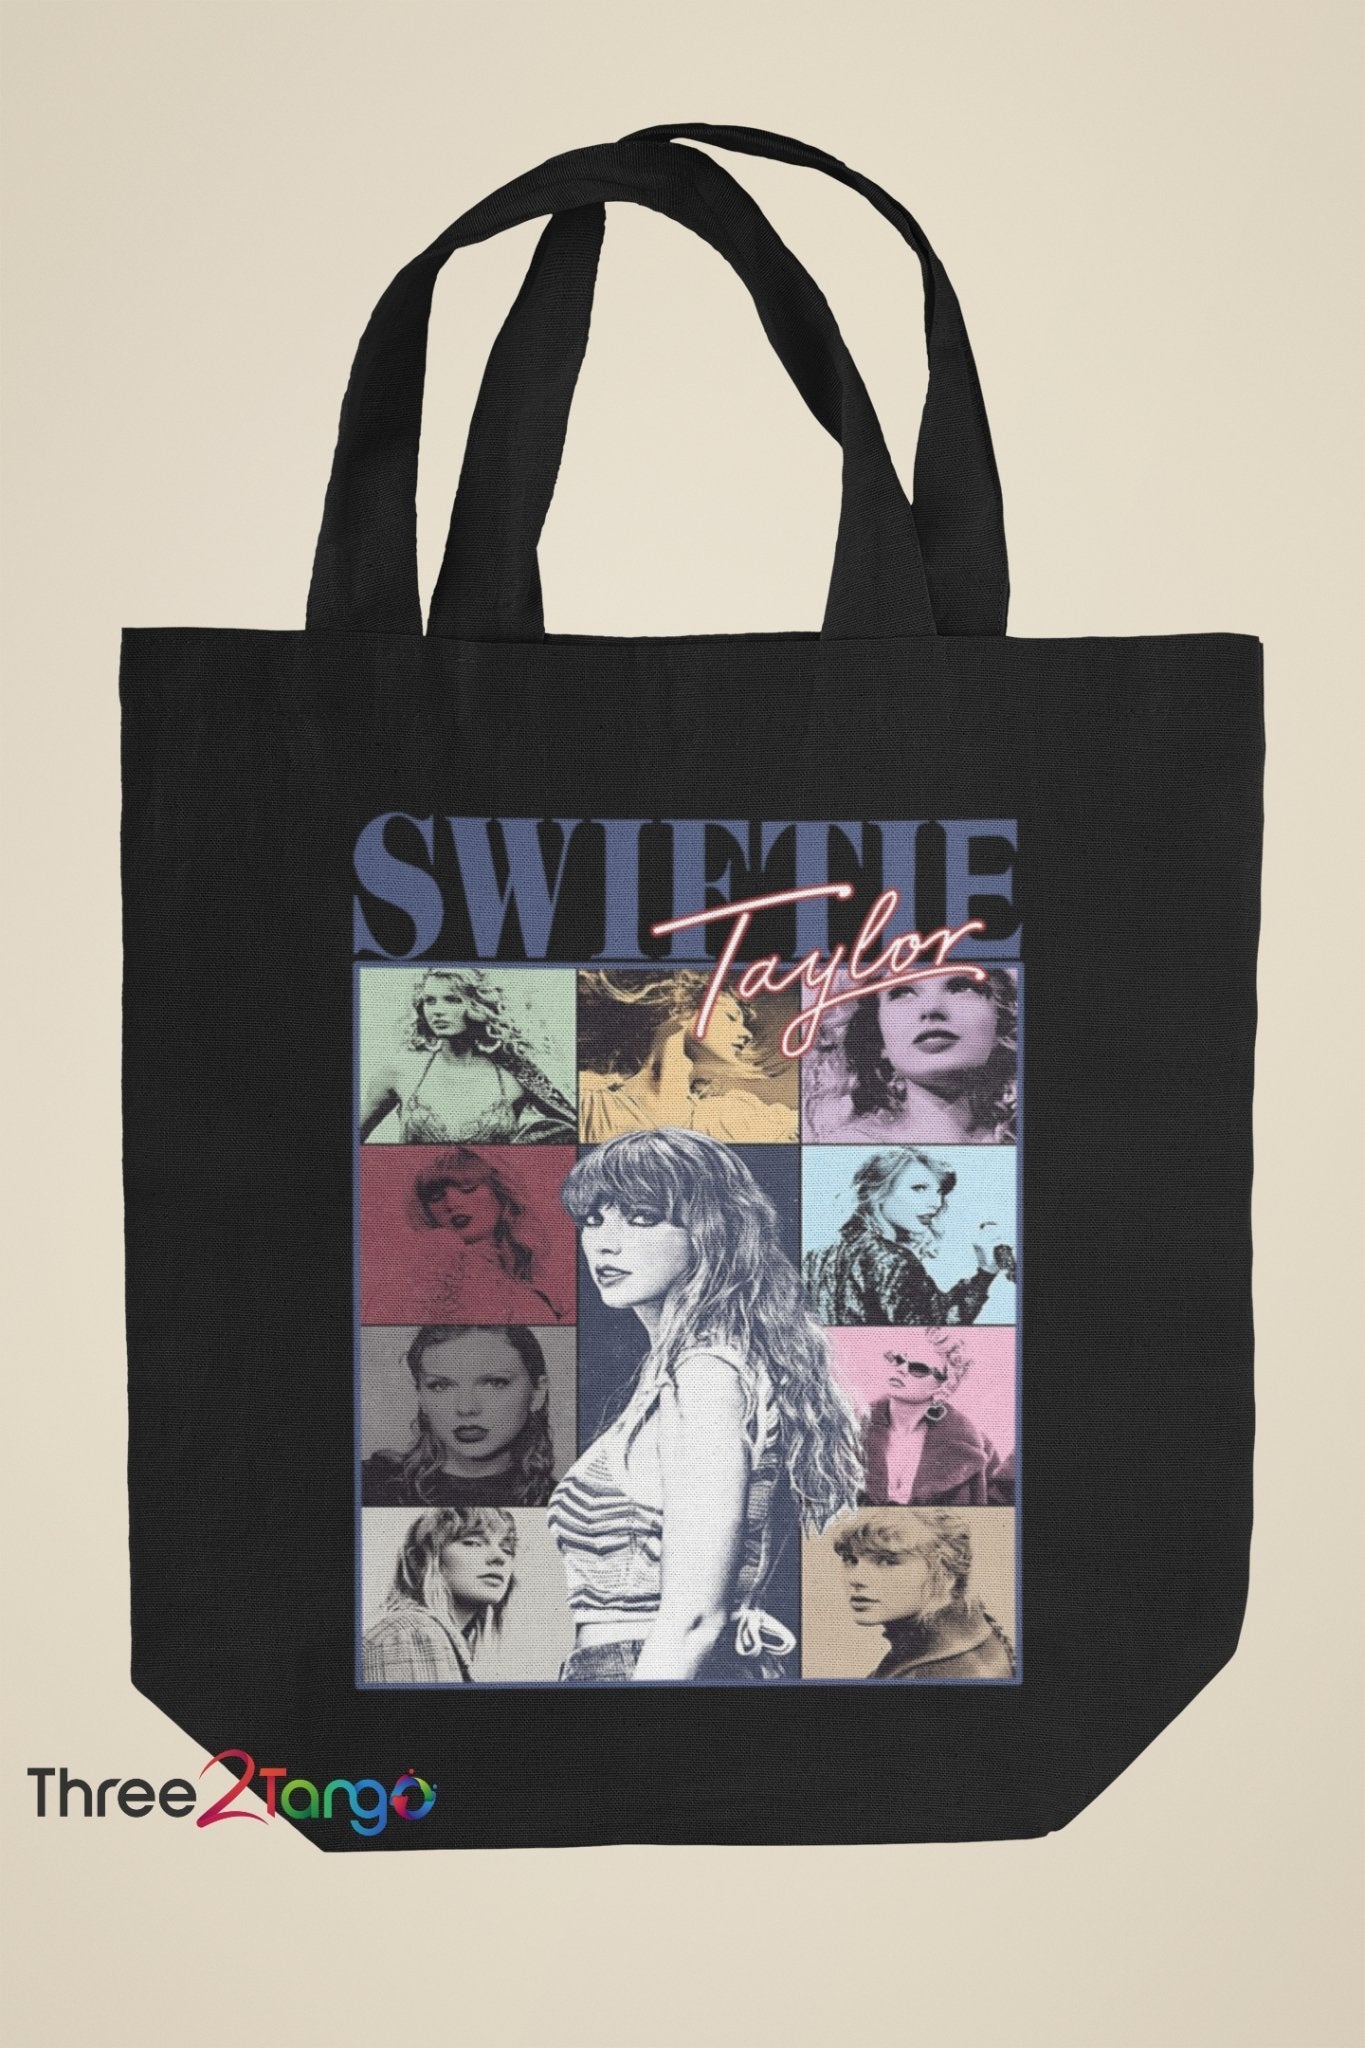 Taylor Swift Concert Tote Bag - The Swiftie - Three2Tango Tee's